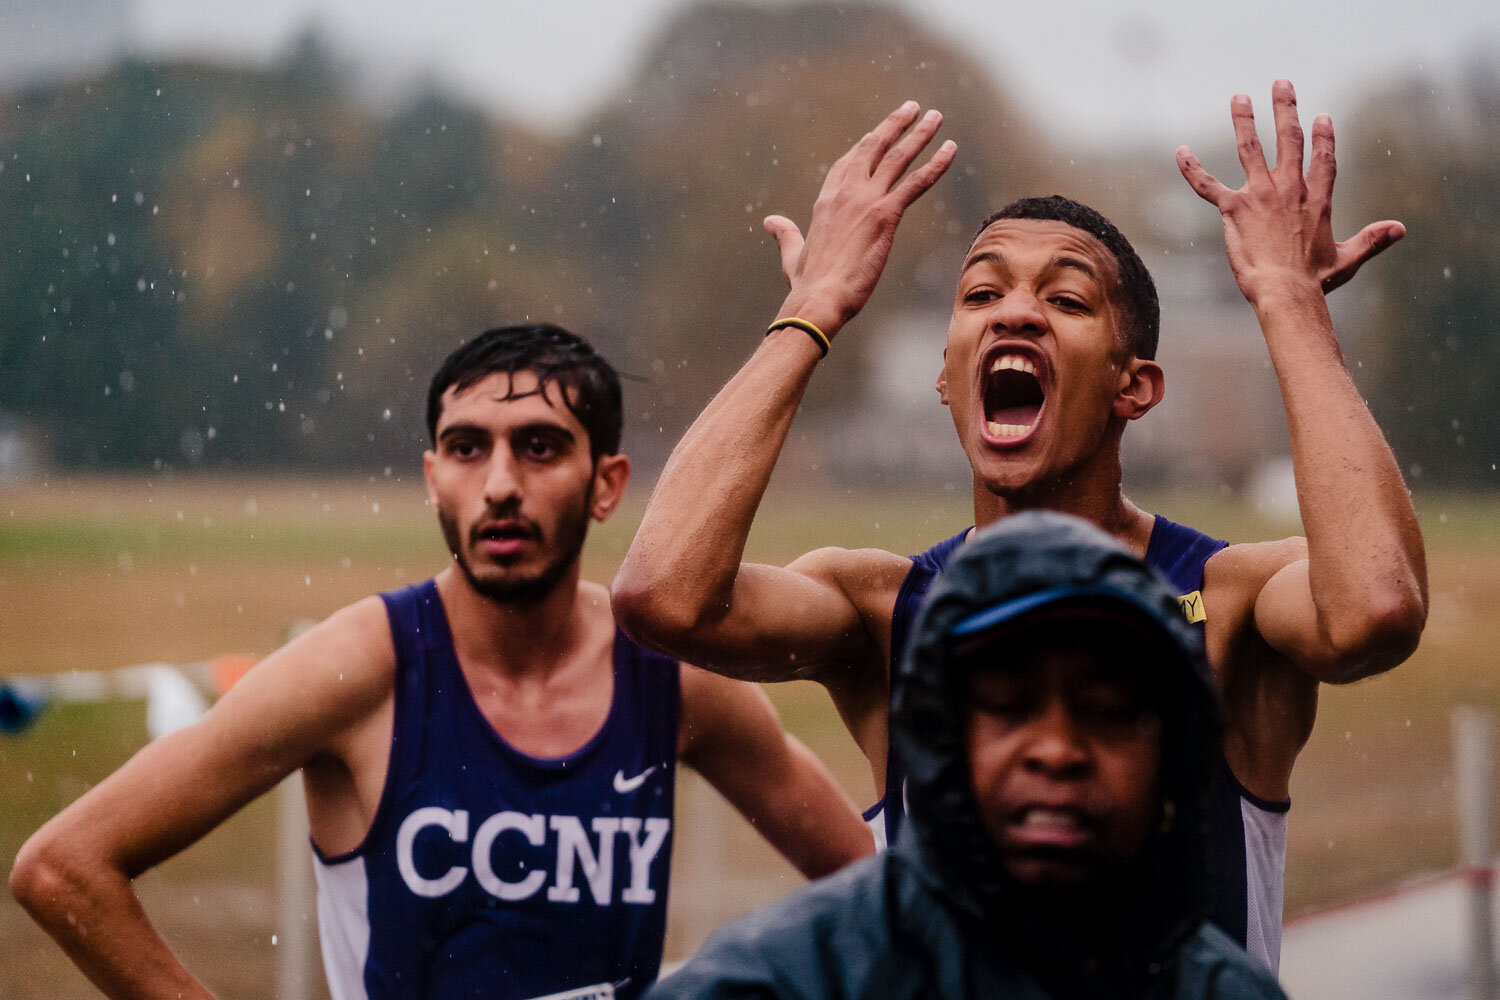 CCNY runner cheer for teammate during CUNYAC Championship race at van cortlandt park